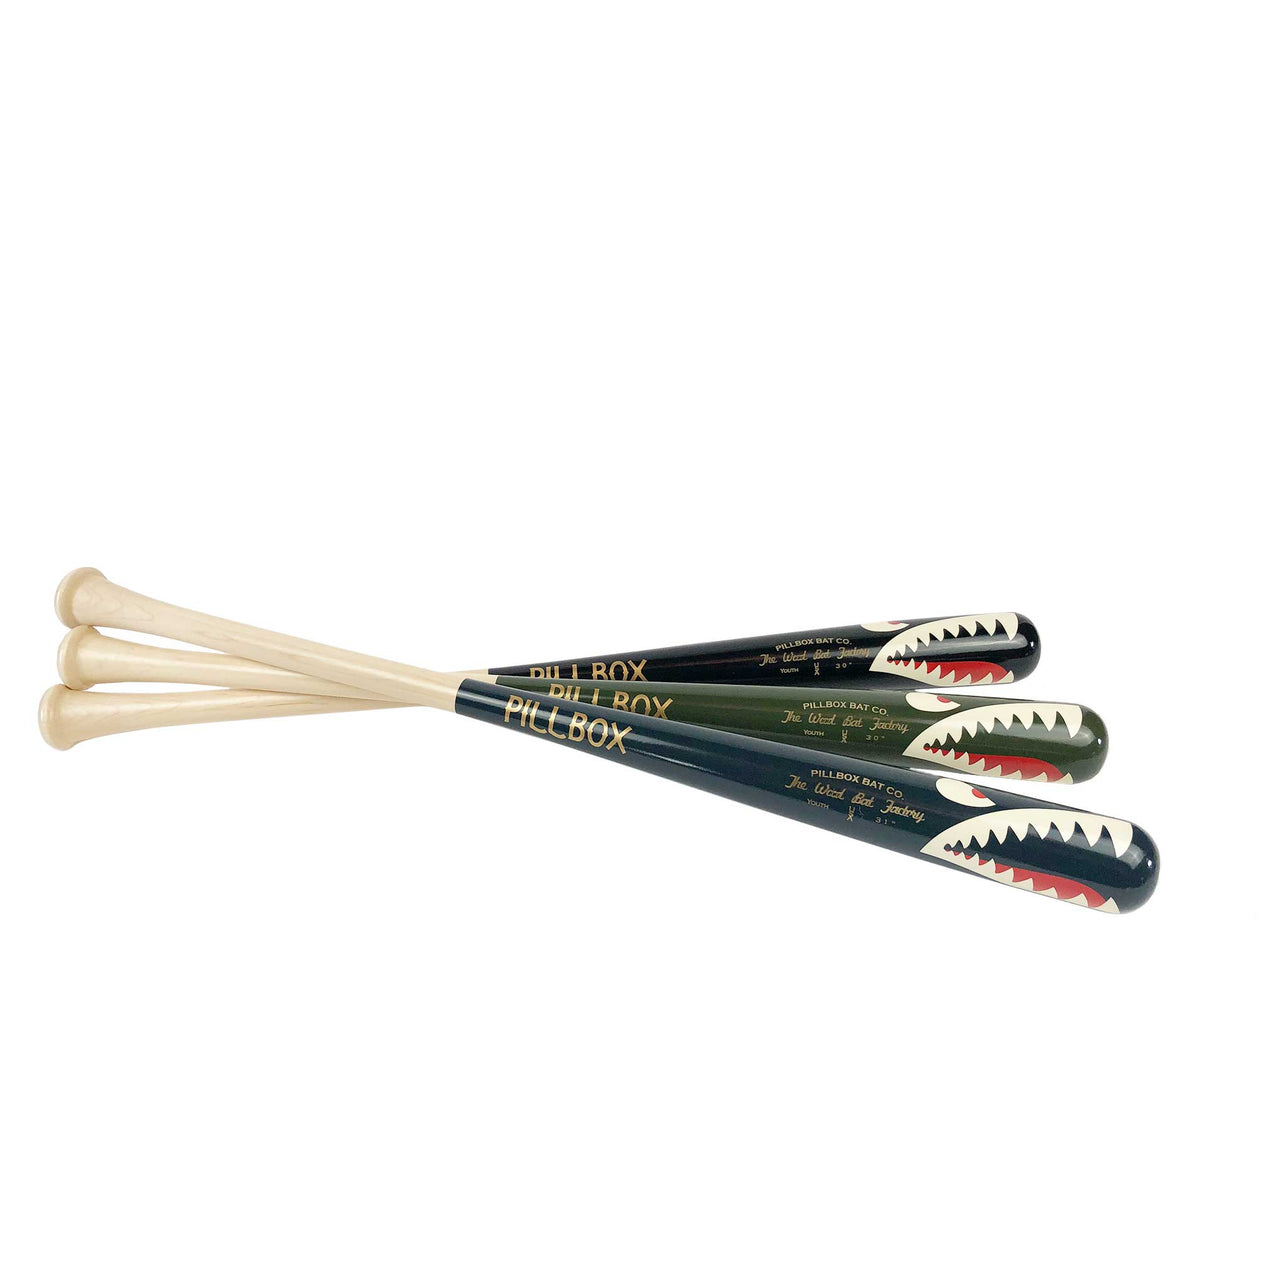 Pillbox Youth Shark Green (Bare Handle) Wood Baseball Bat | Maple | 30" (-6)